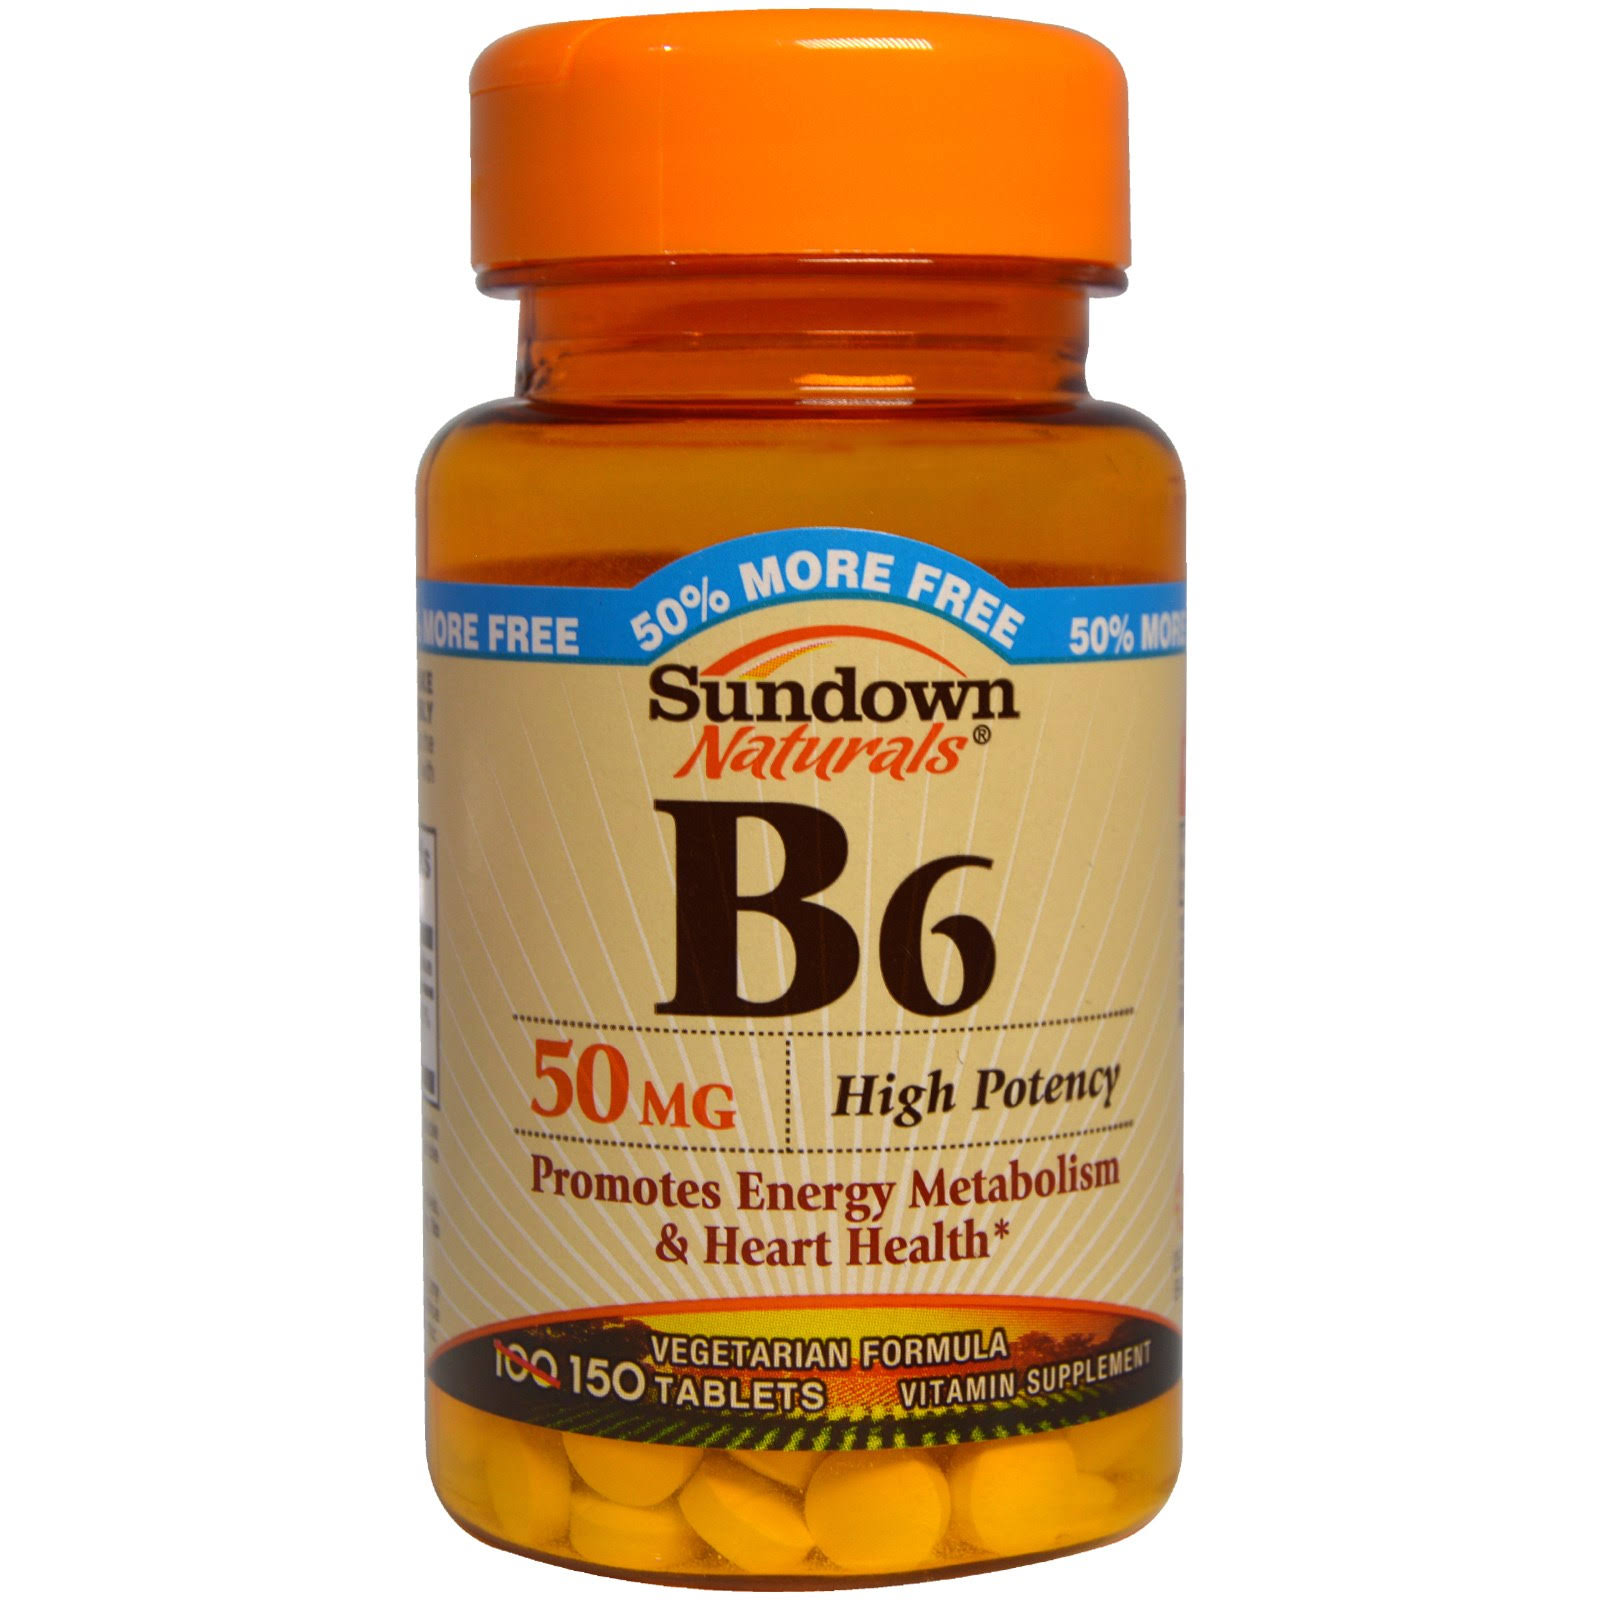 Sundown Naturals Vitamin B6 Supplement - 50mg, 150ct